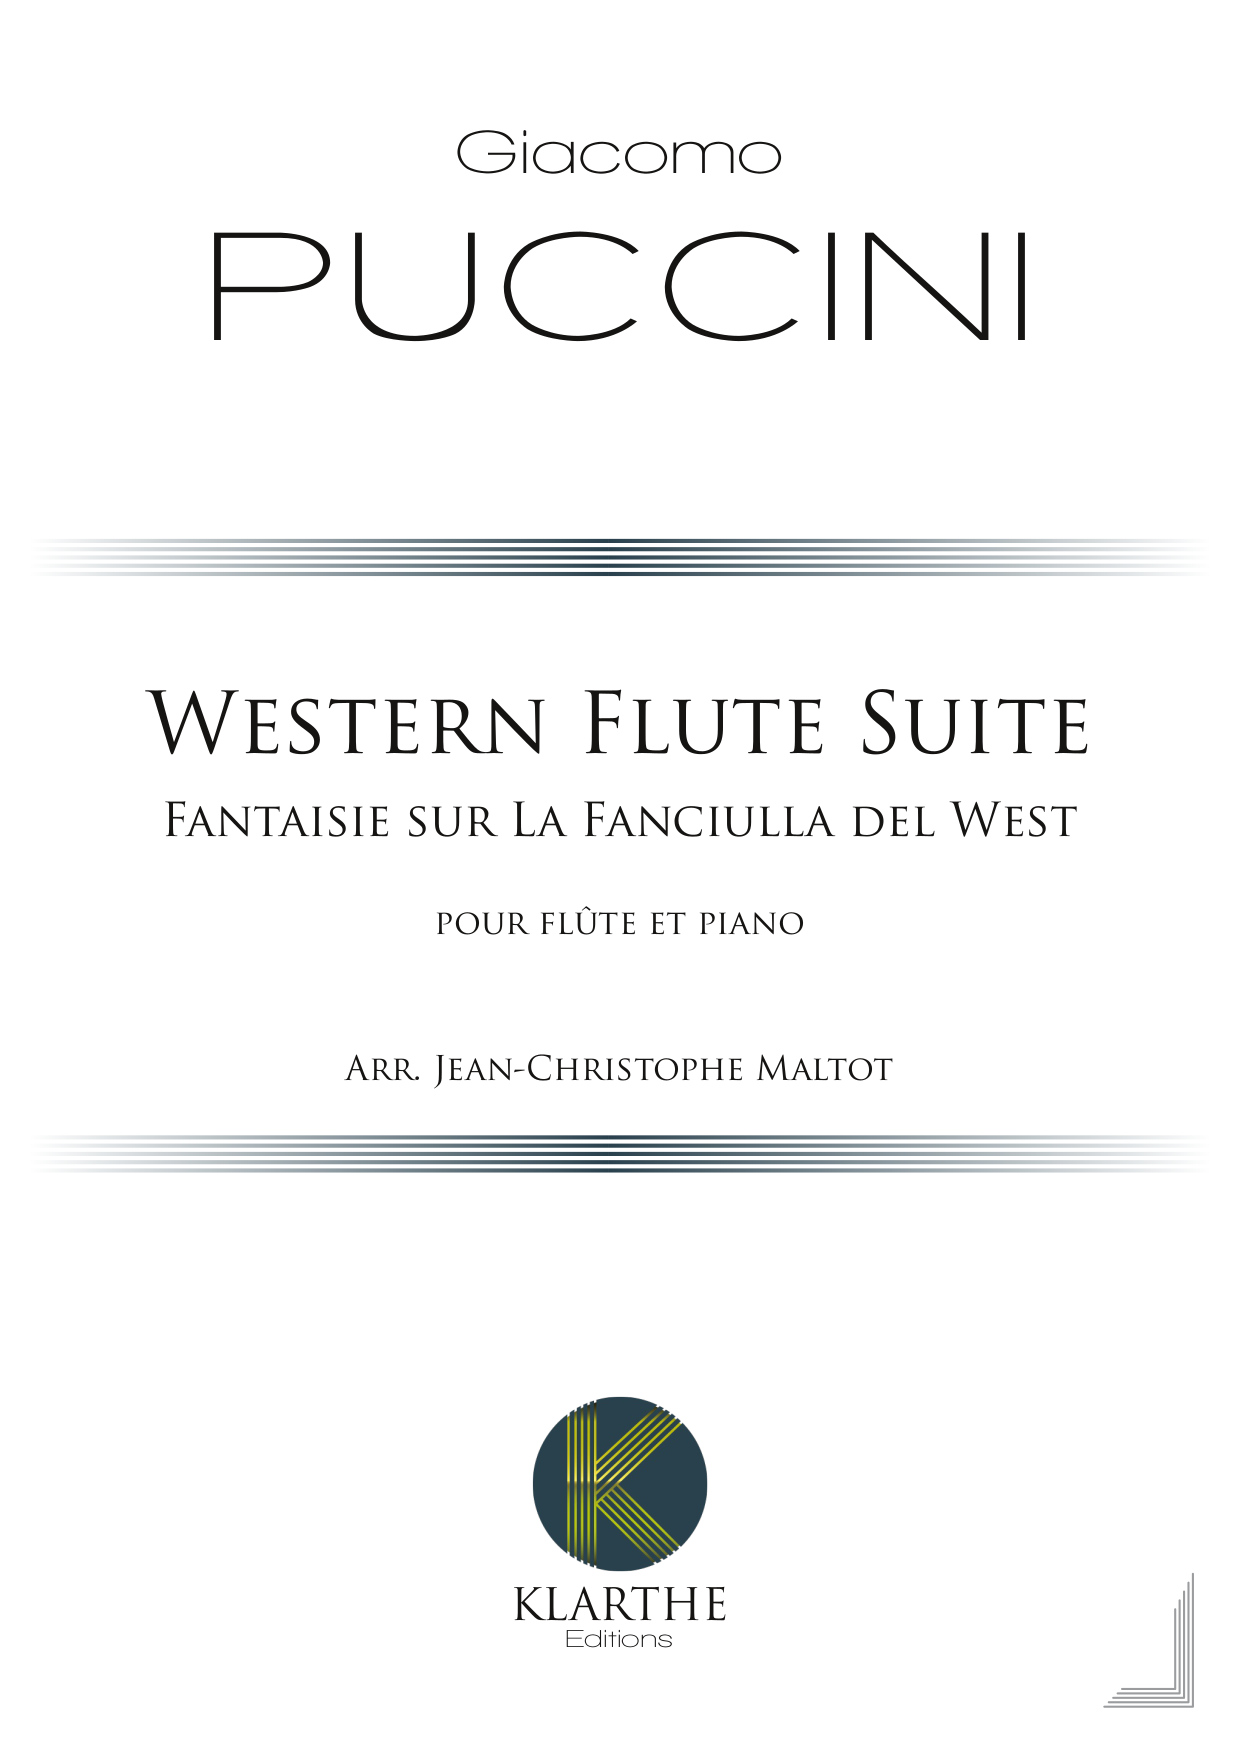 Western Flute Suite ? Fantaisie sur La Fanciulla del West (PUCCINI GIACOMO)